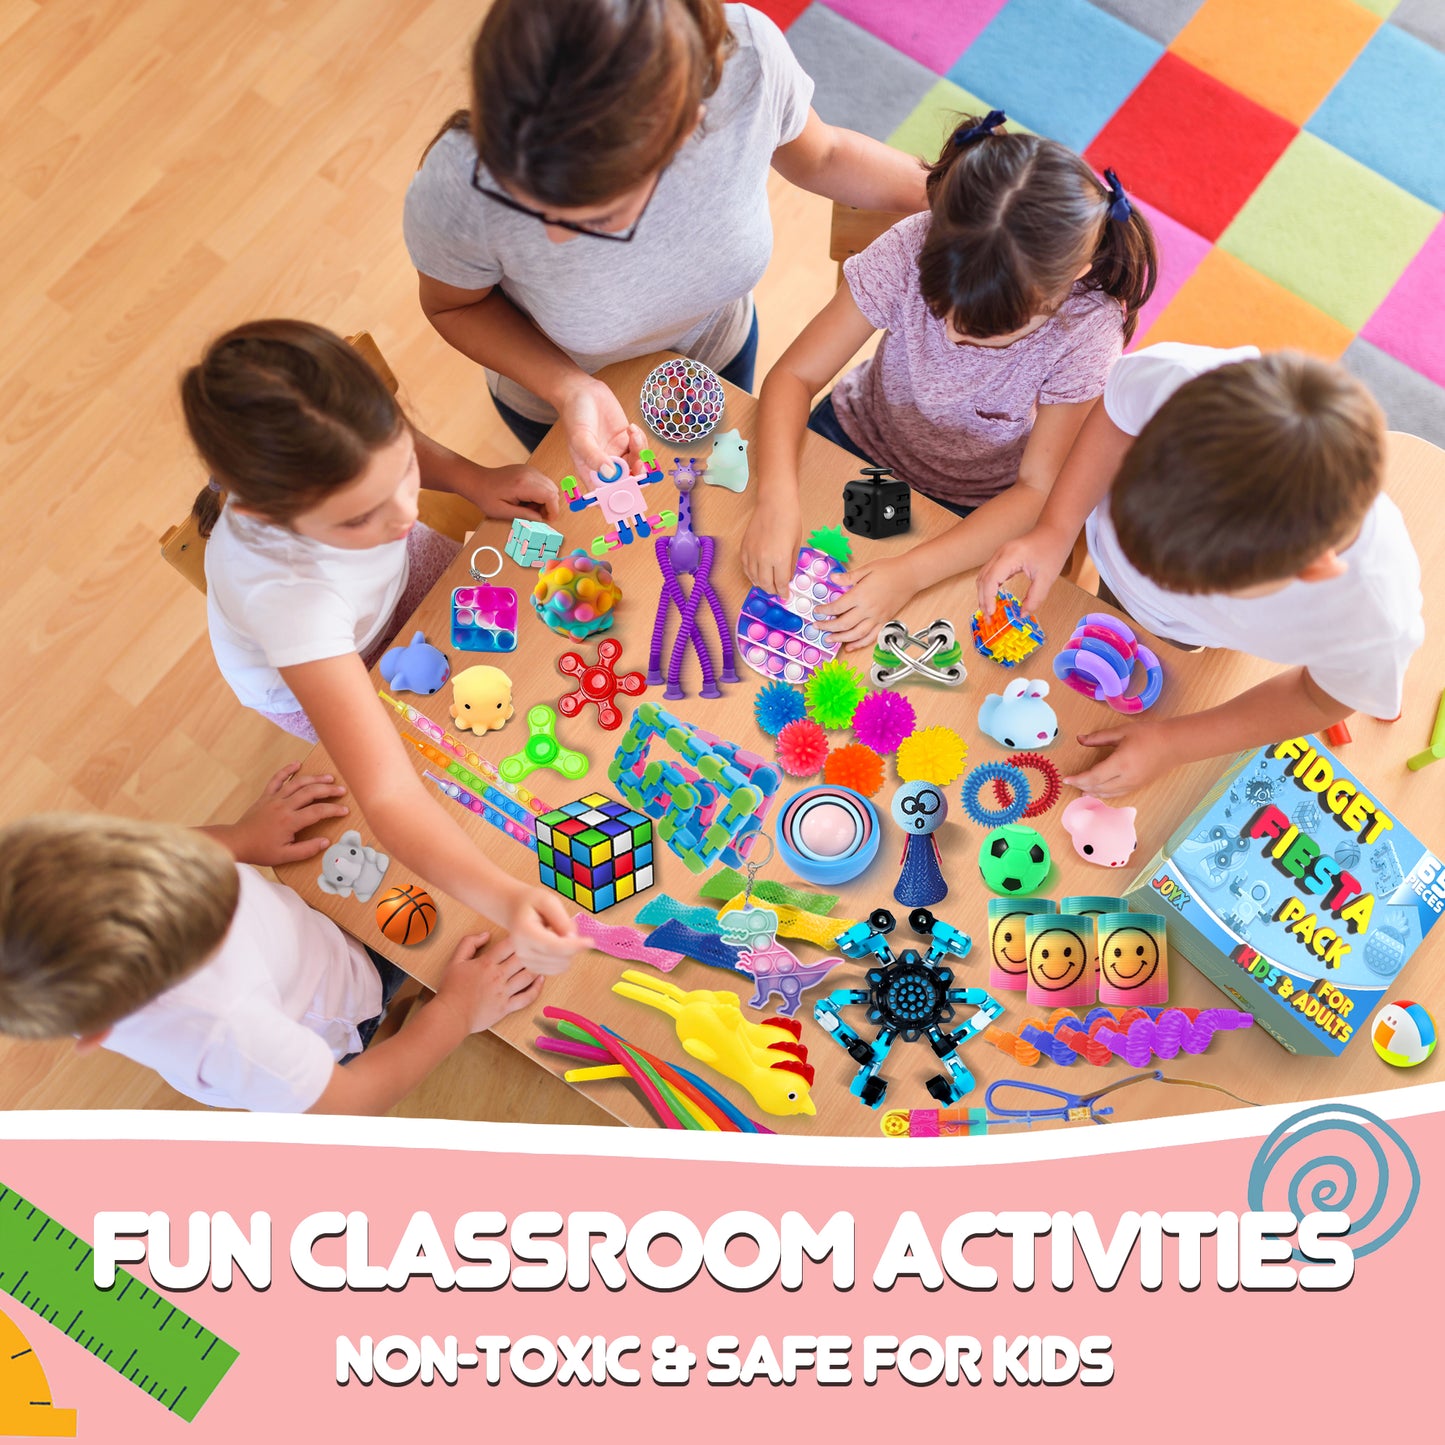 JoyX 65-Piece Sensory Fidget Toy Set - Focus & Stress Relief Tools for Kids with Autism & ADHD